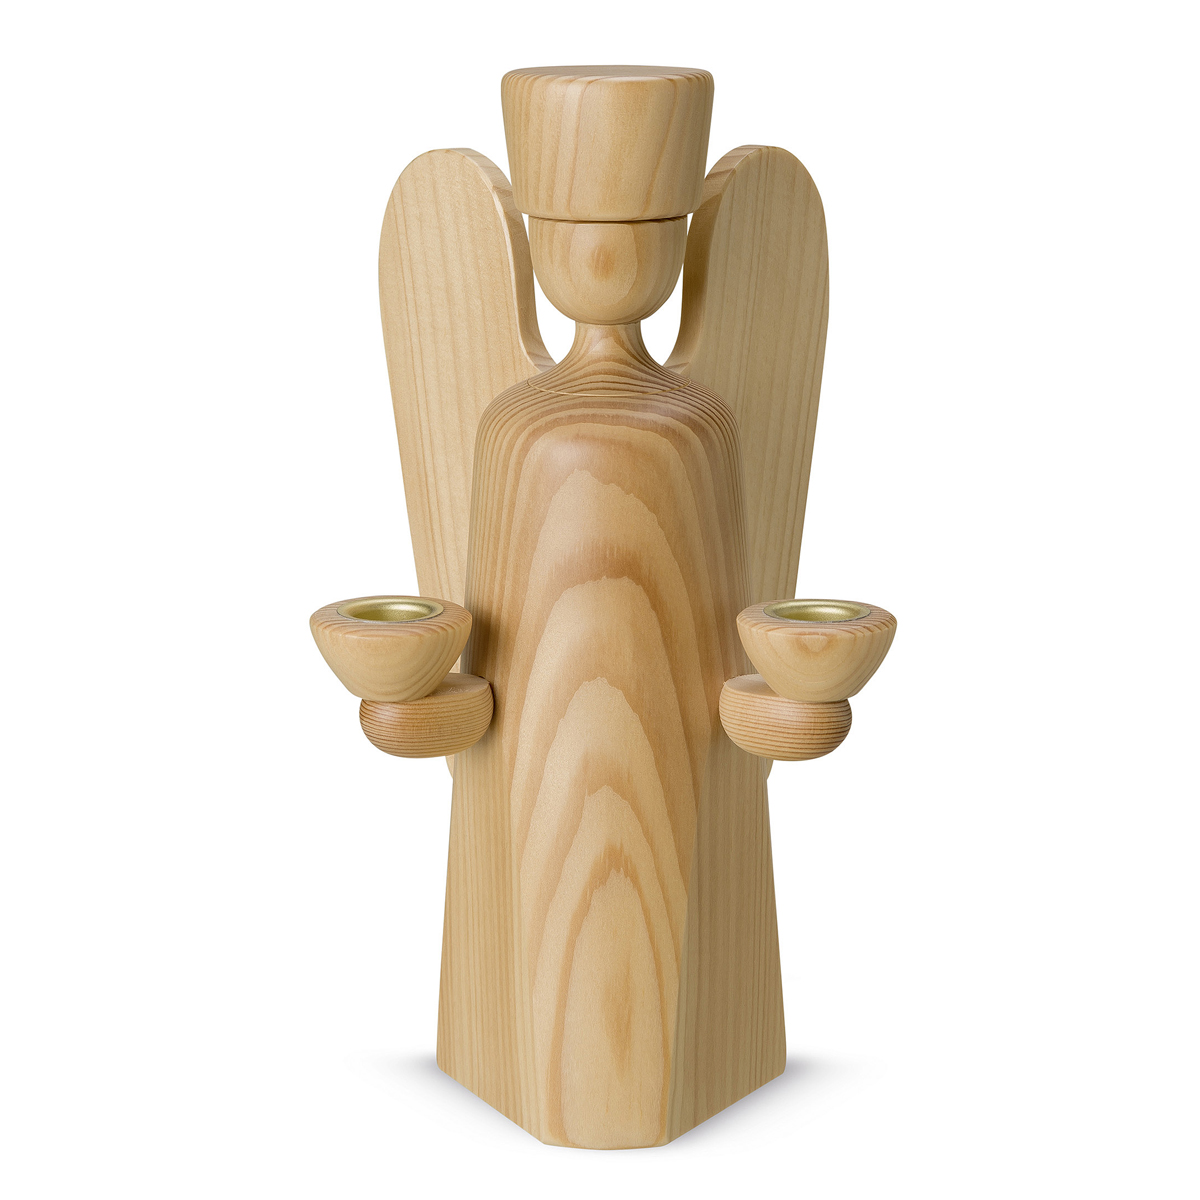 Angel candle holder, large, natural wood